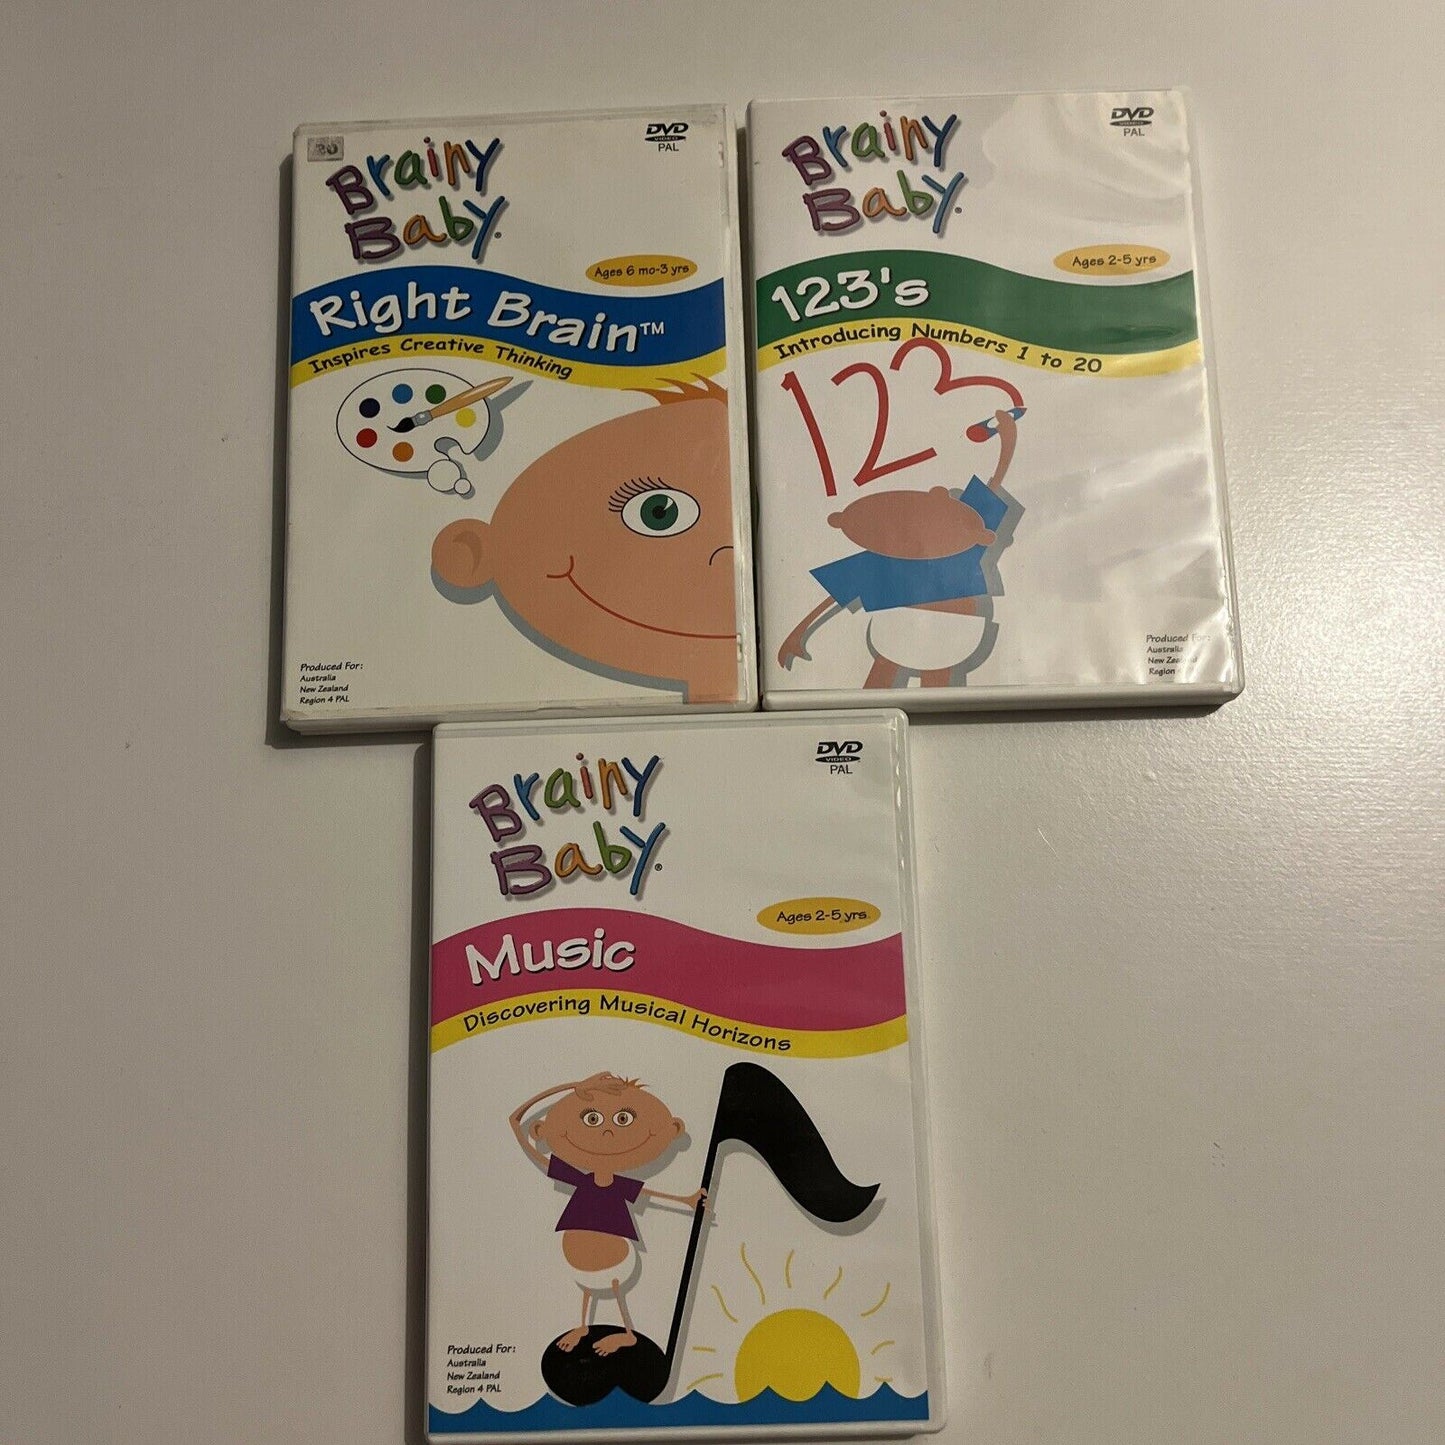 3x Brainy Baby DVDs: Right Brain / 123's / Music. Region 4